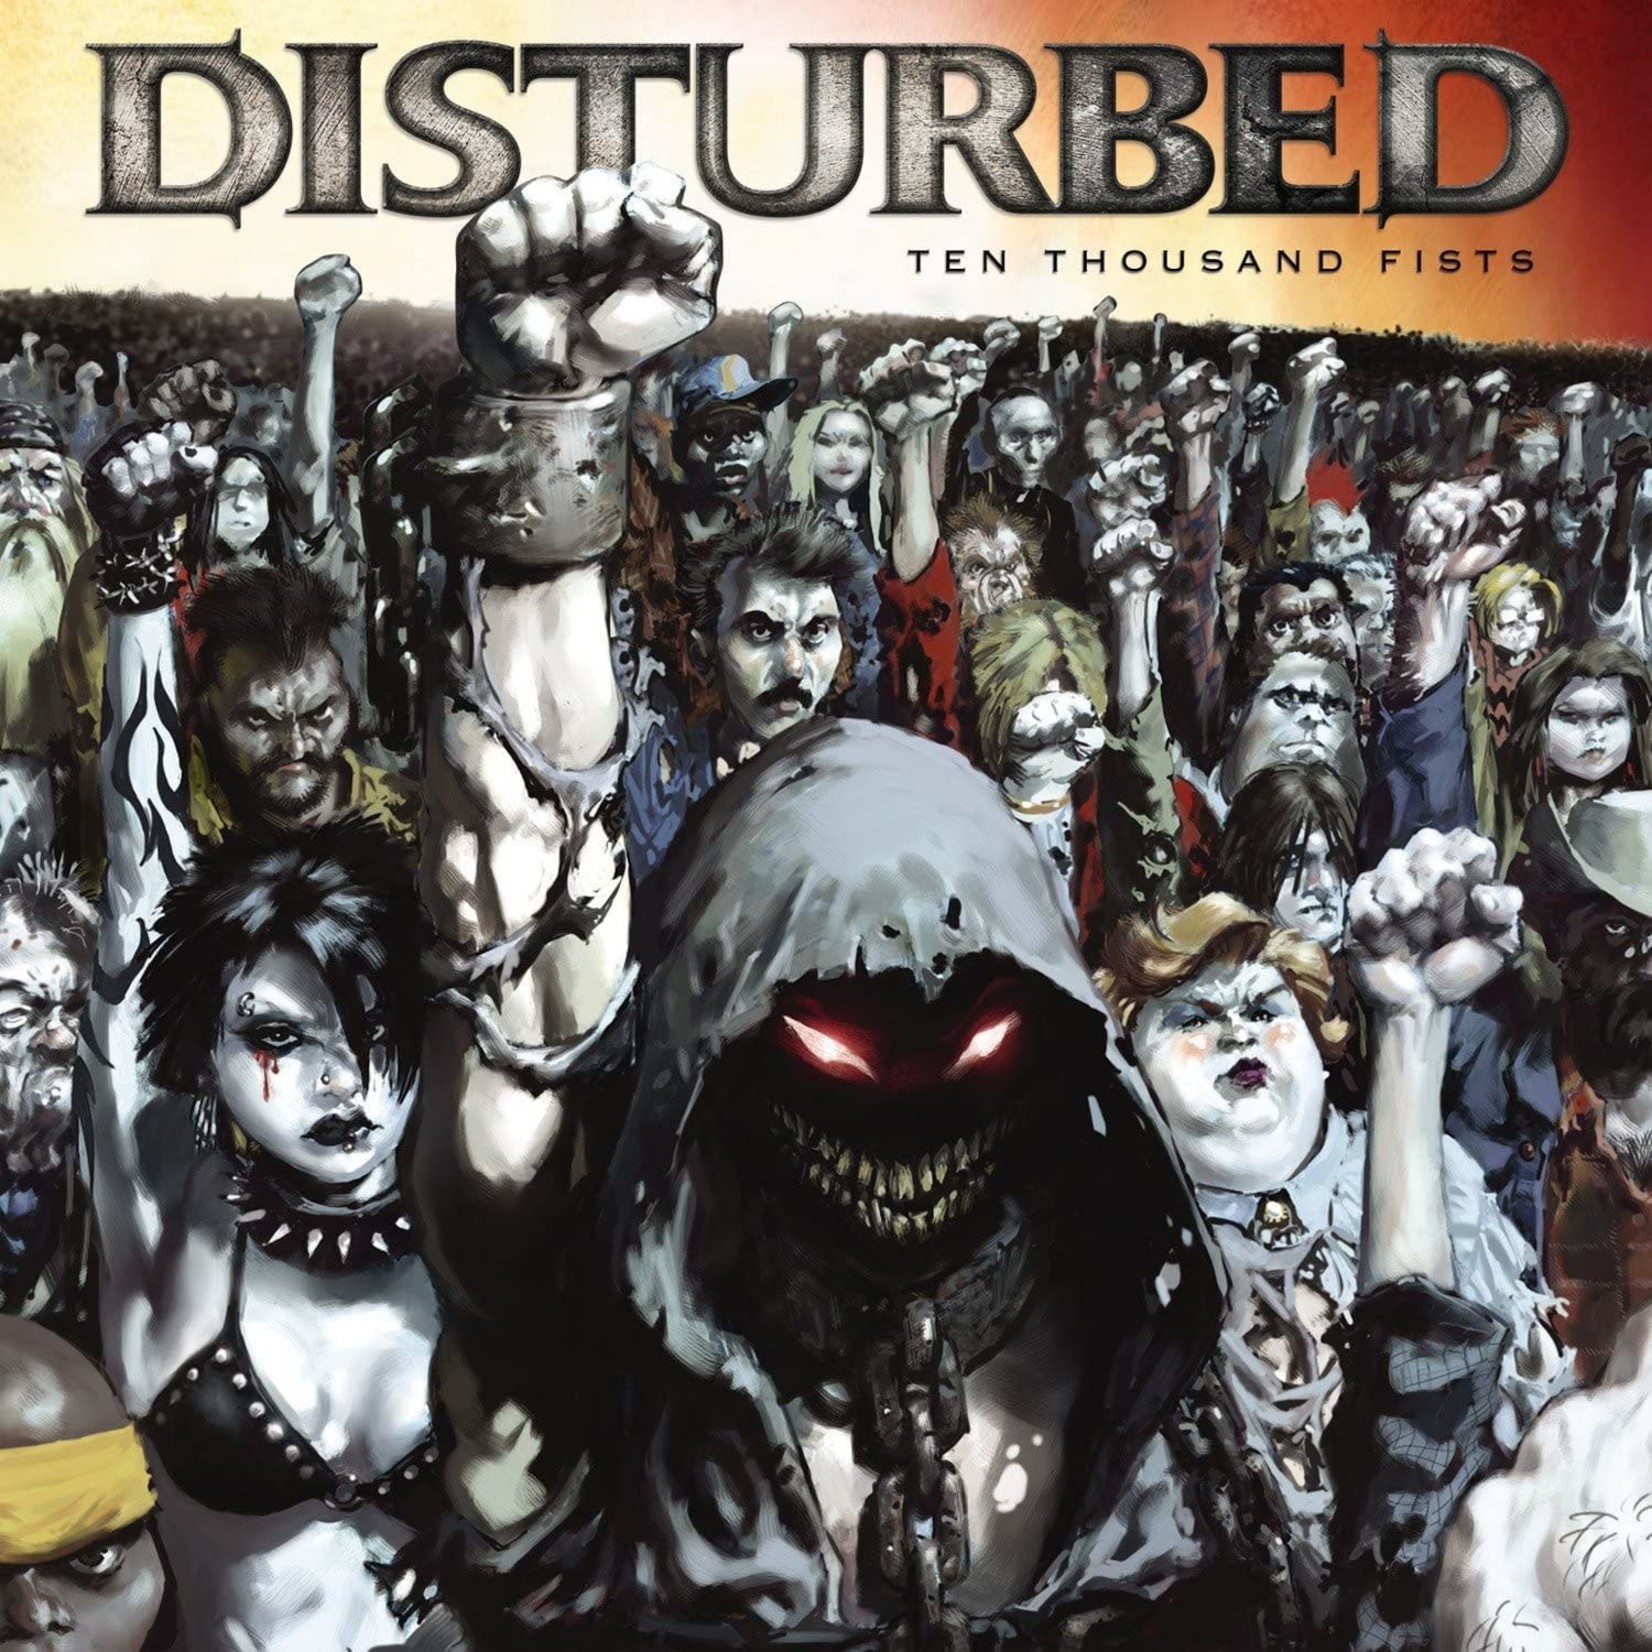 [New] Disturbed - Ten Thousand Fists (2LP)